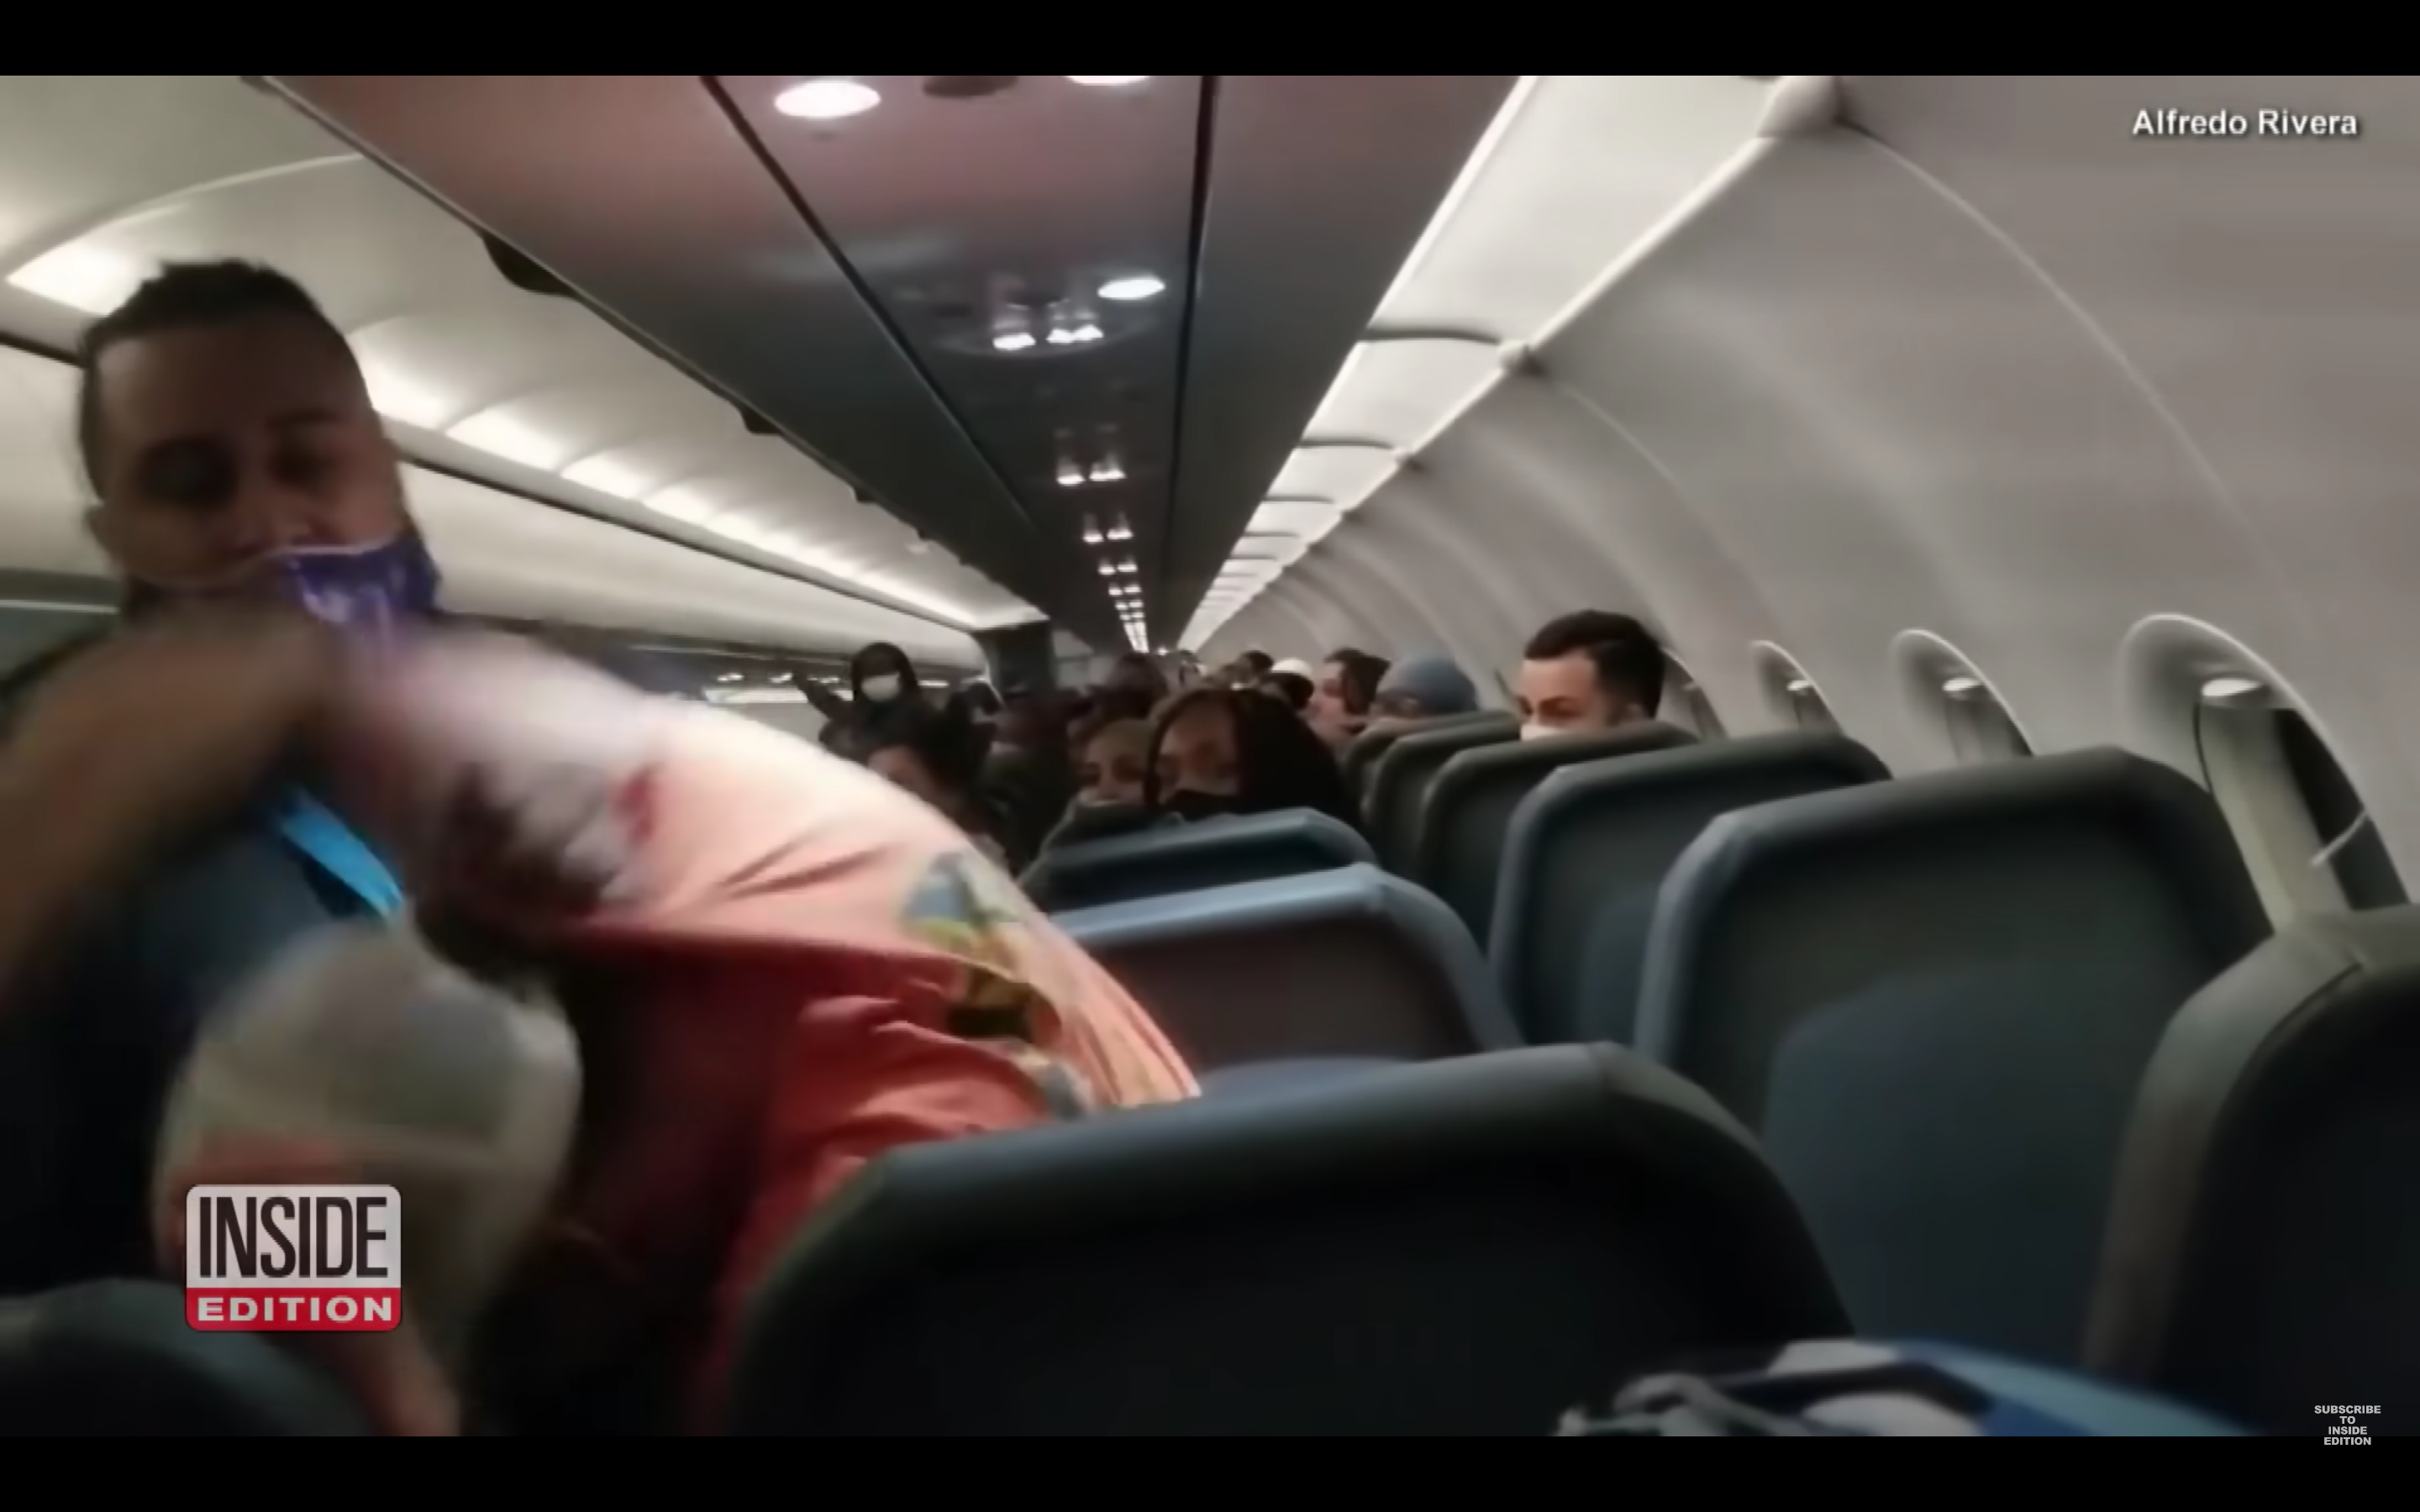 Maxwell Berry agrediendo a un auxiliar de vuelo. | Foto: Youtube.com/InsideEdition